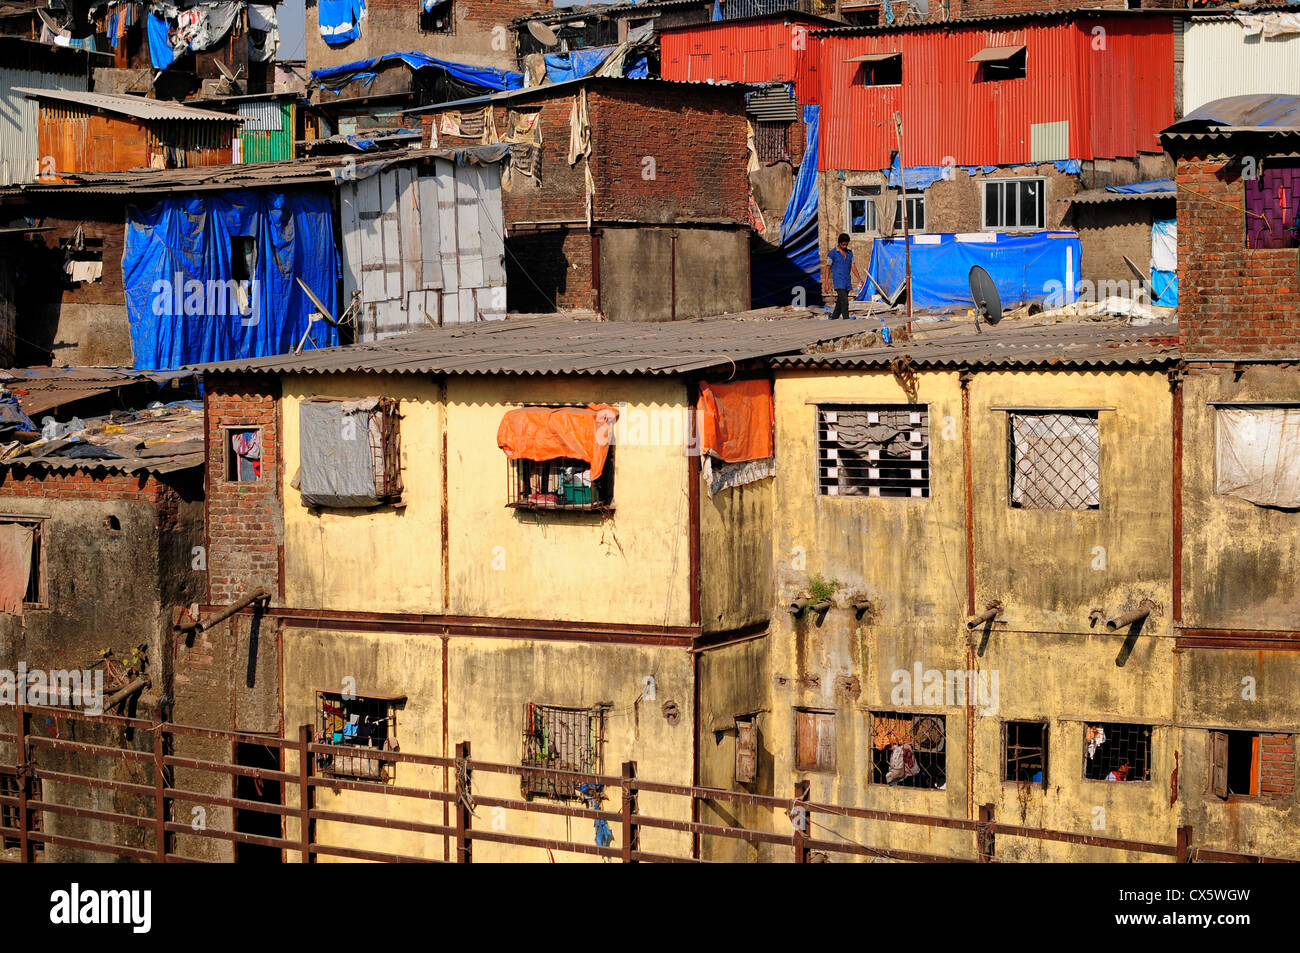 Baraccopoli / slum case a stazione di Bandra, Mumbai, India Foto Stock